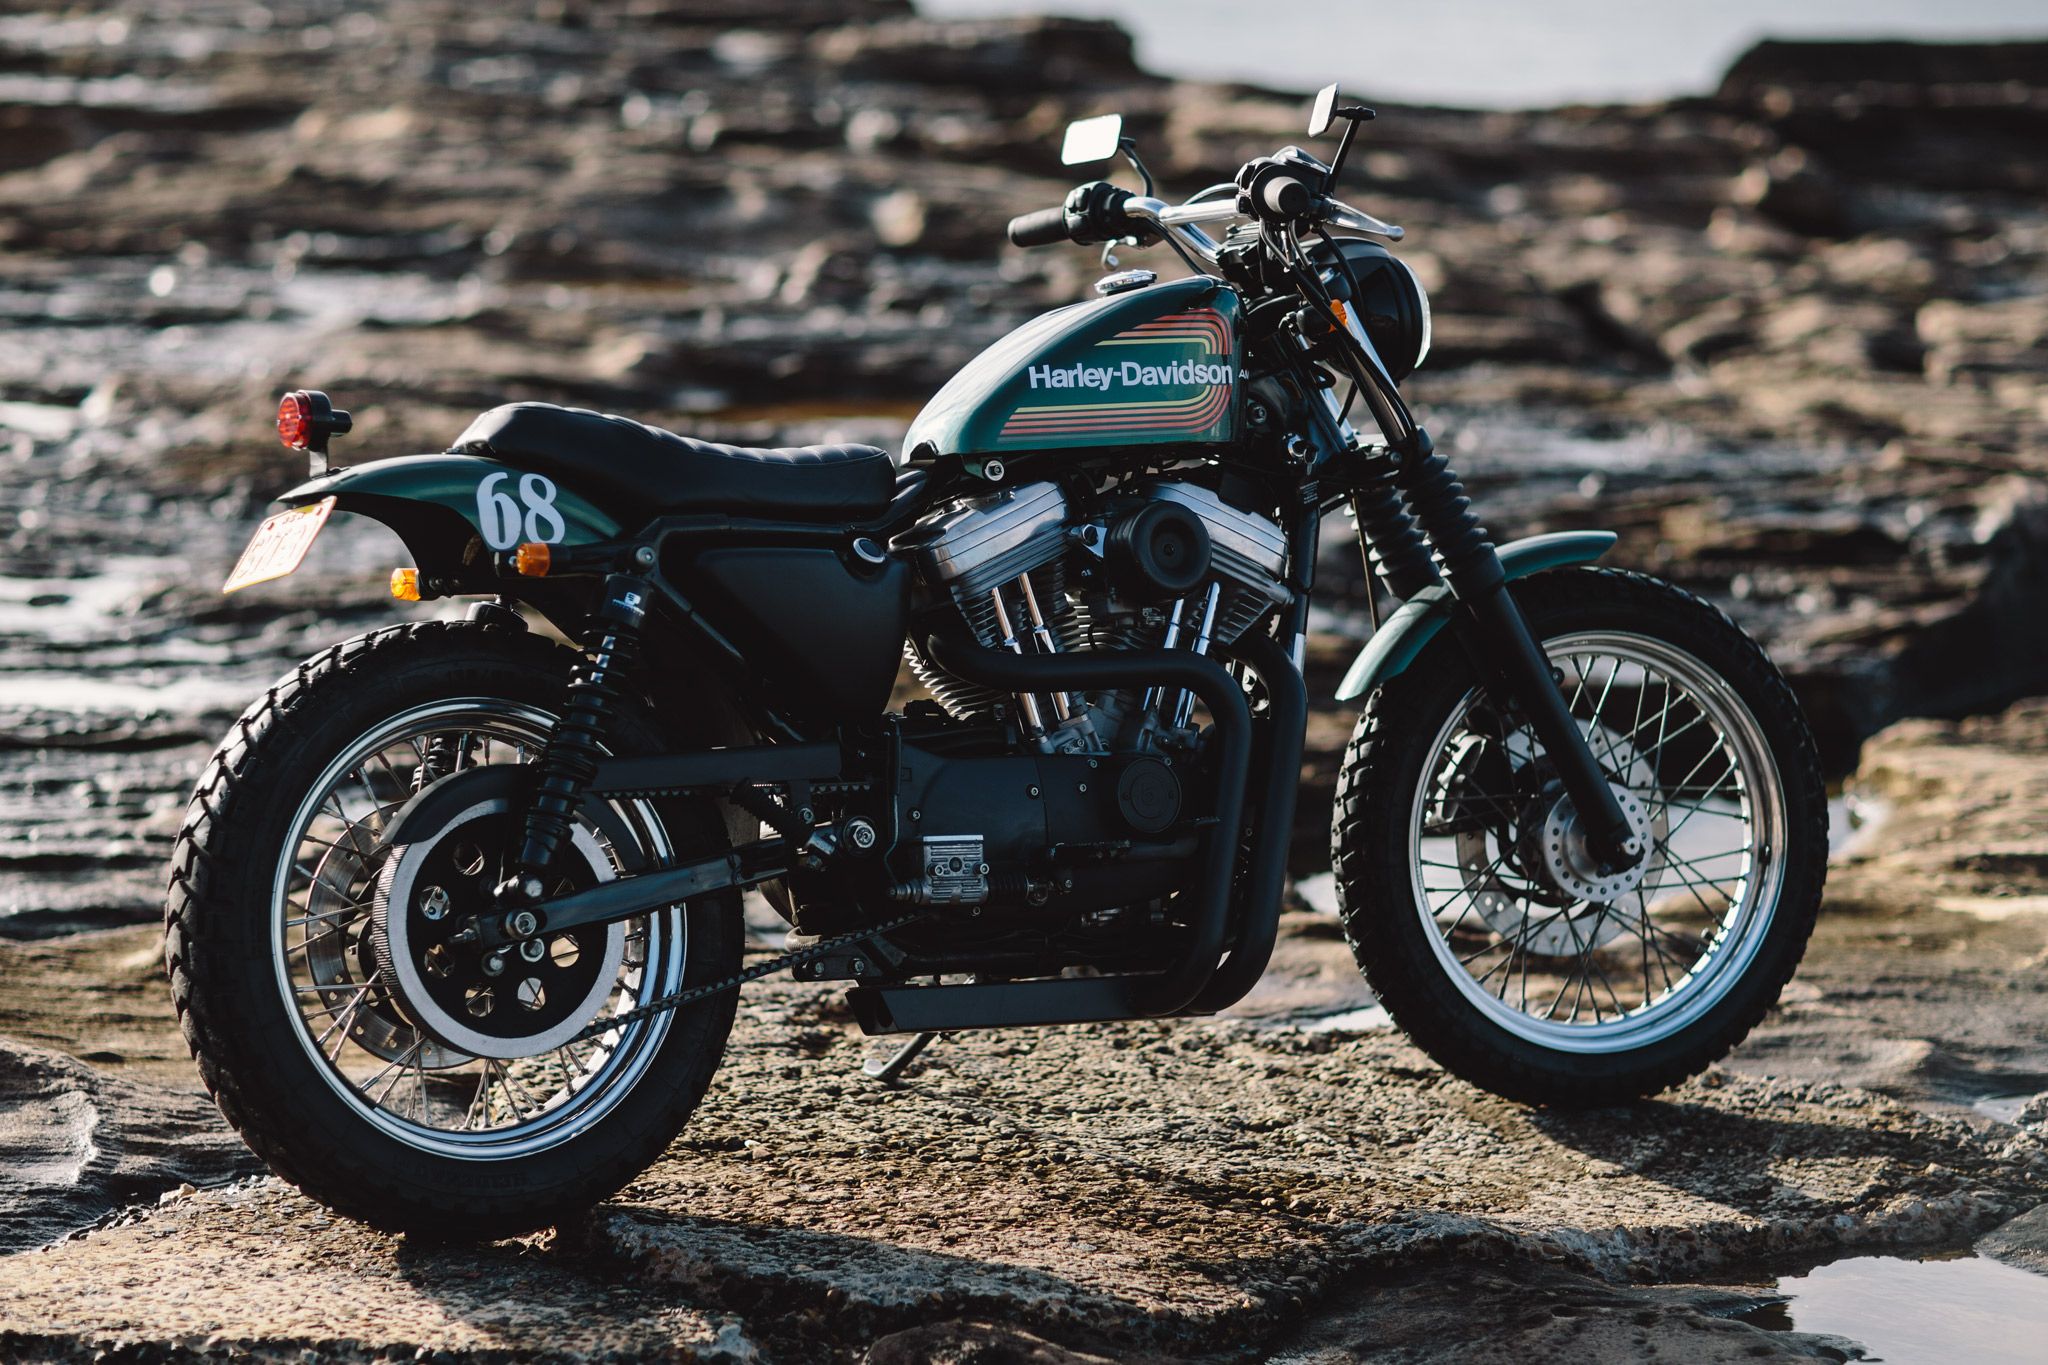 Harley Motorcycle Background